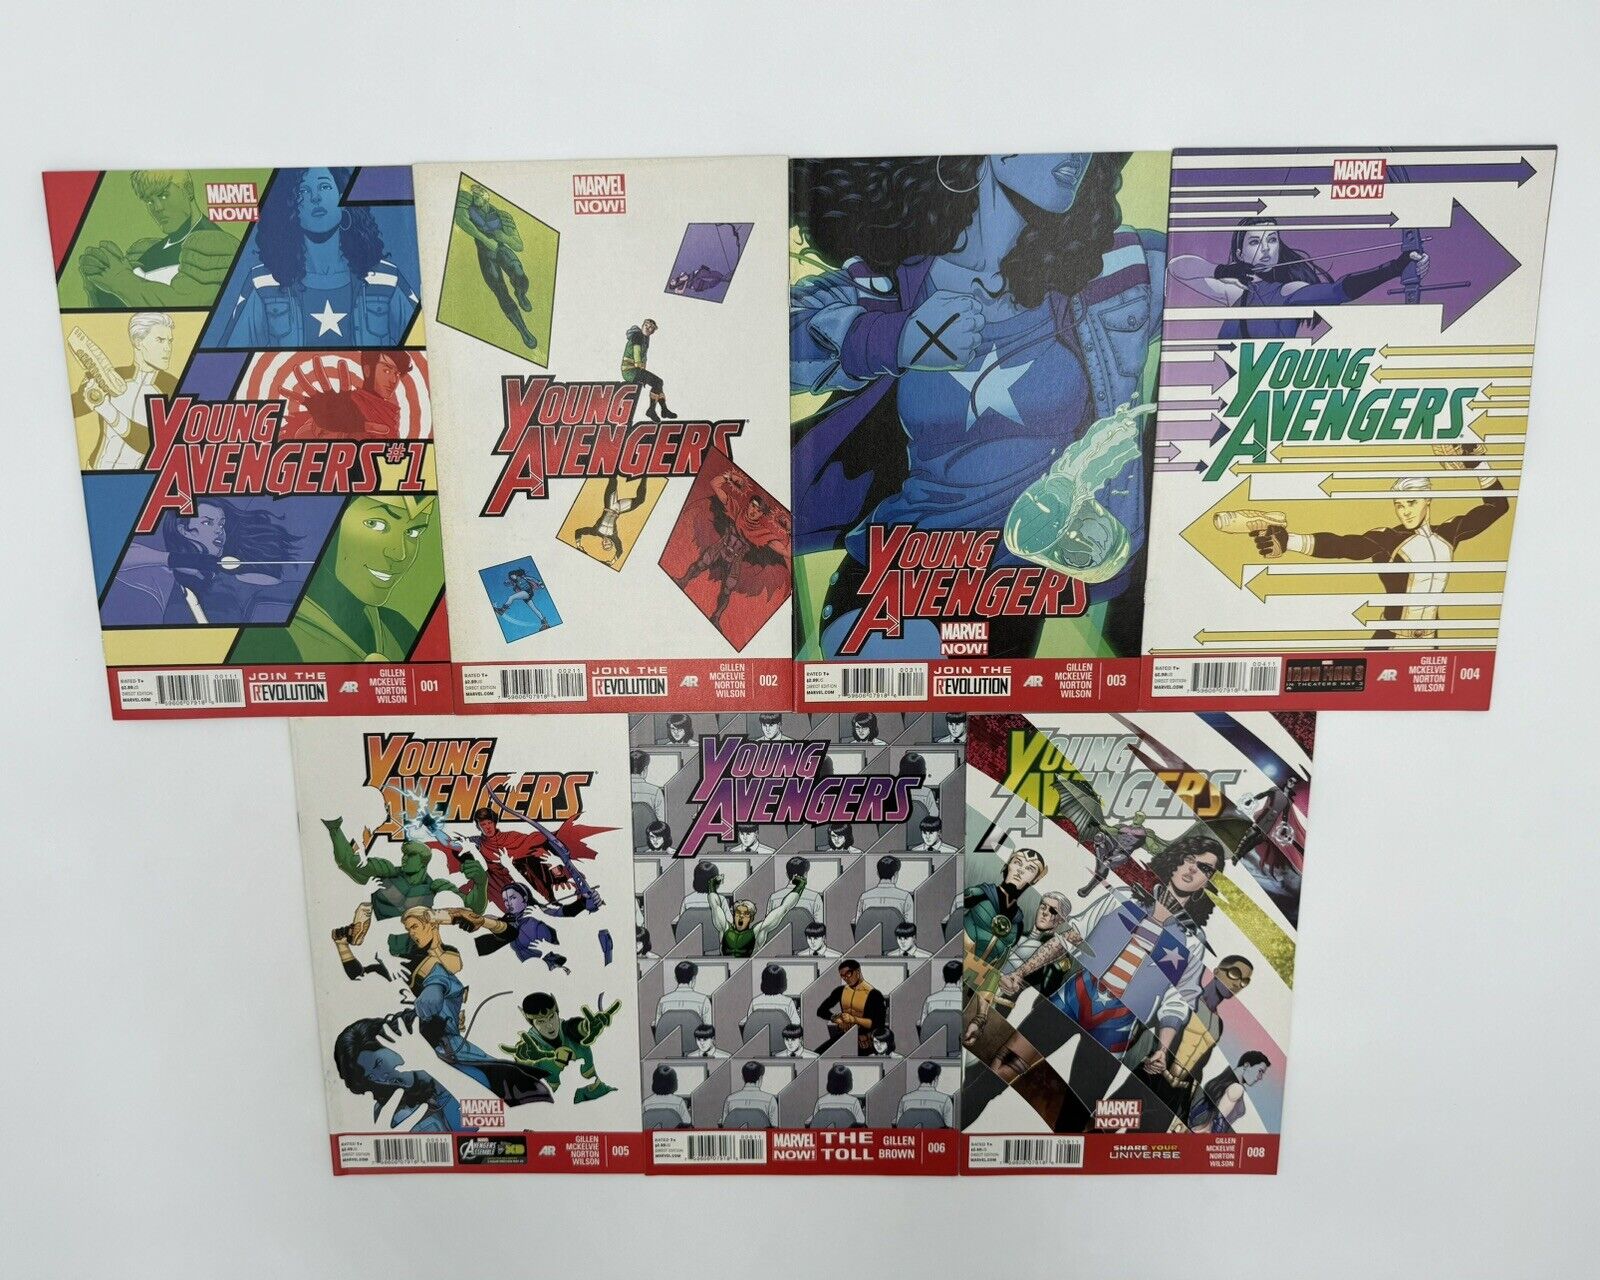 Young Avengers #1-8 Lot (2013) Marvel NOW Comics 1 2 3 4 5 6 8 (NO #7) set 